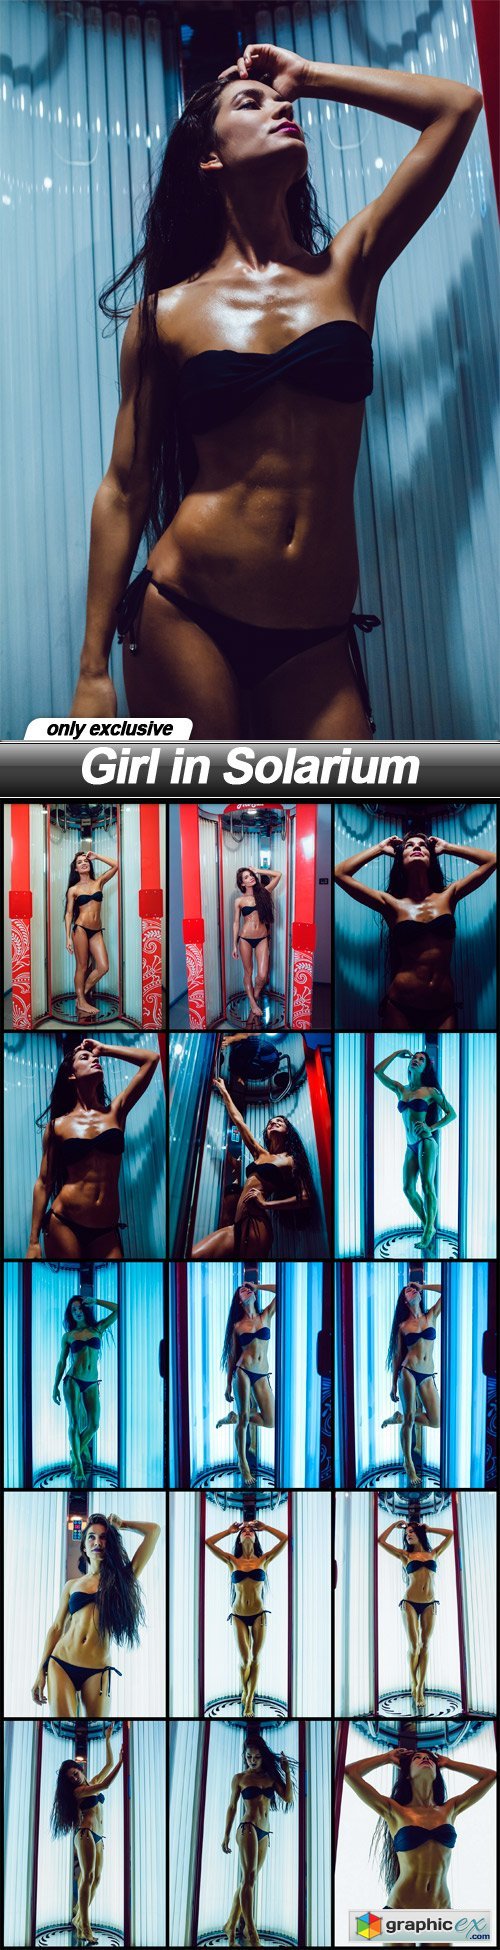 Girl in Solarium - 15 UHQ JPEG